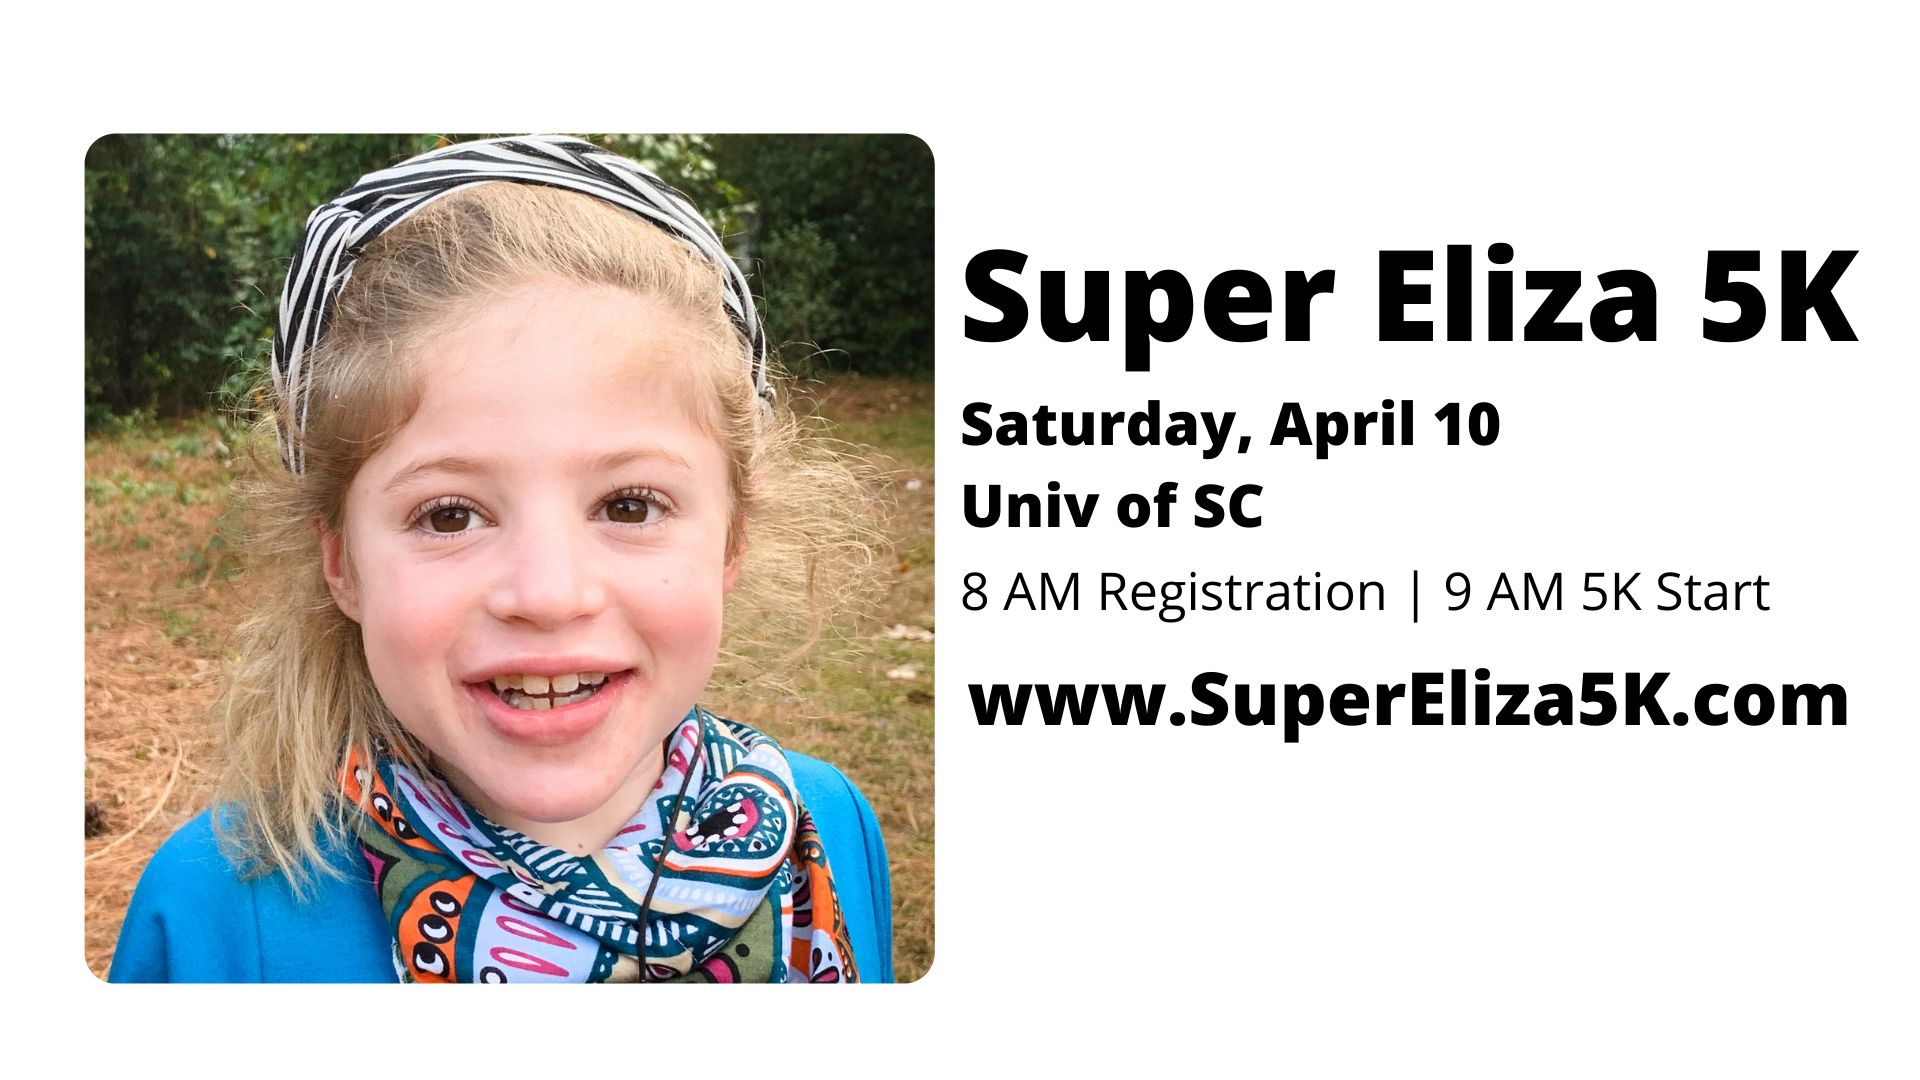 Super Eliza 5K on 4/10 at USC, Columbia, South Carolina, United States